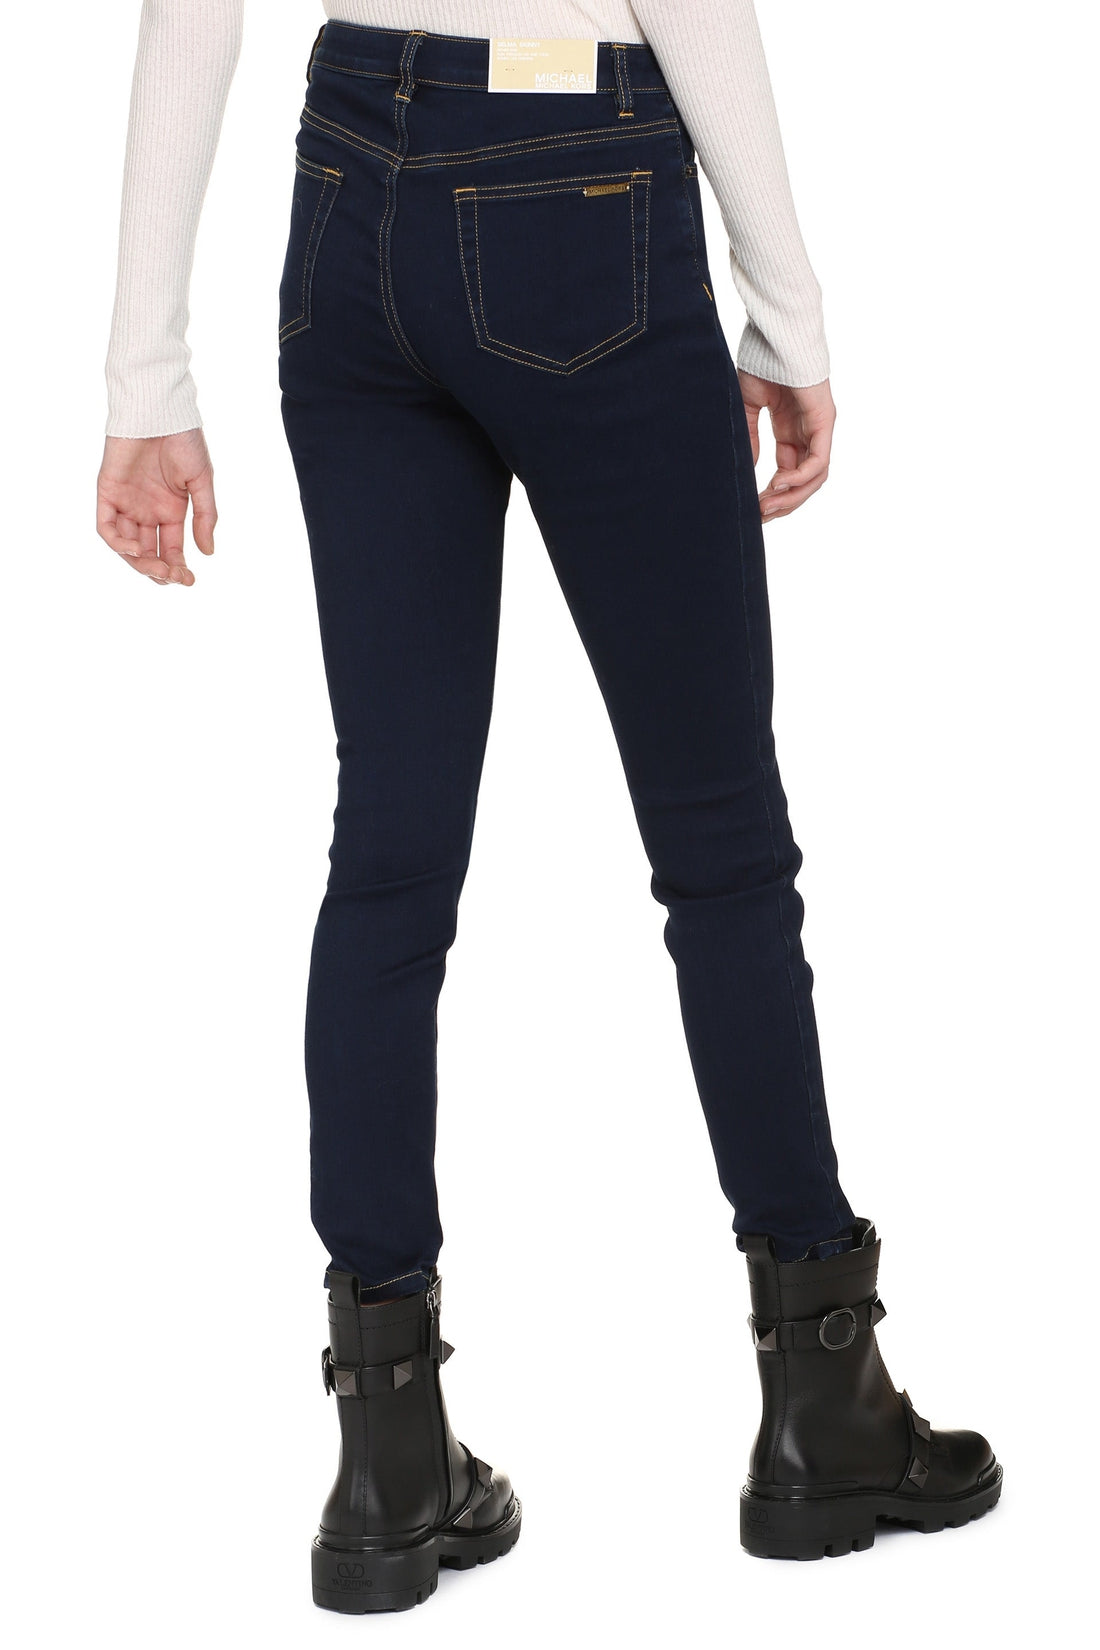 MICHAEL MICHAEL KORS-OUTLET-SALE-5-pocket skinny jeans-ARCHIVIST